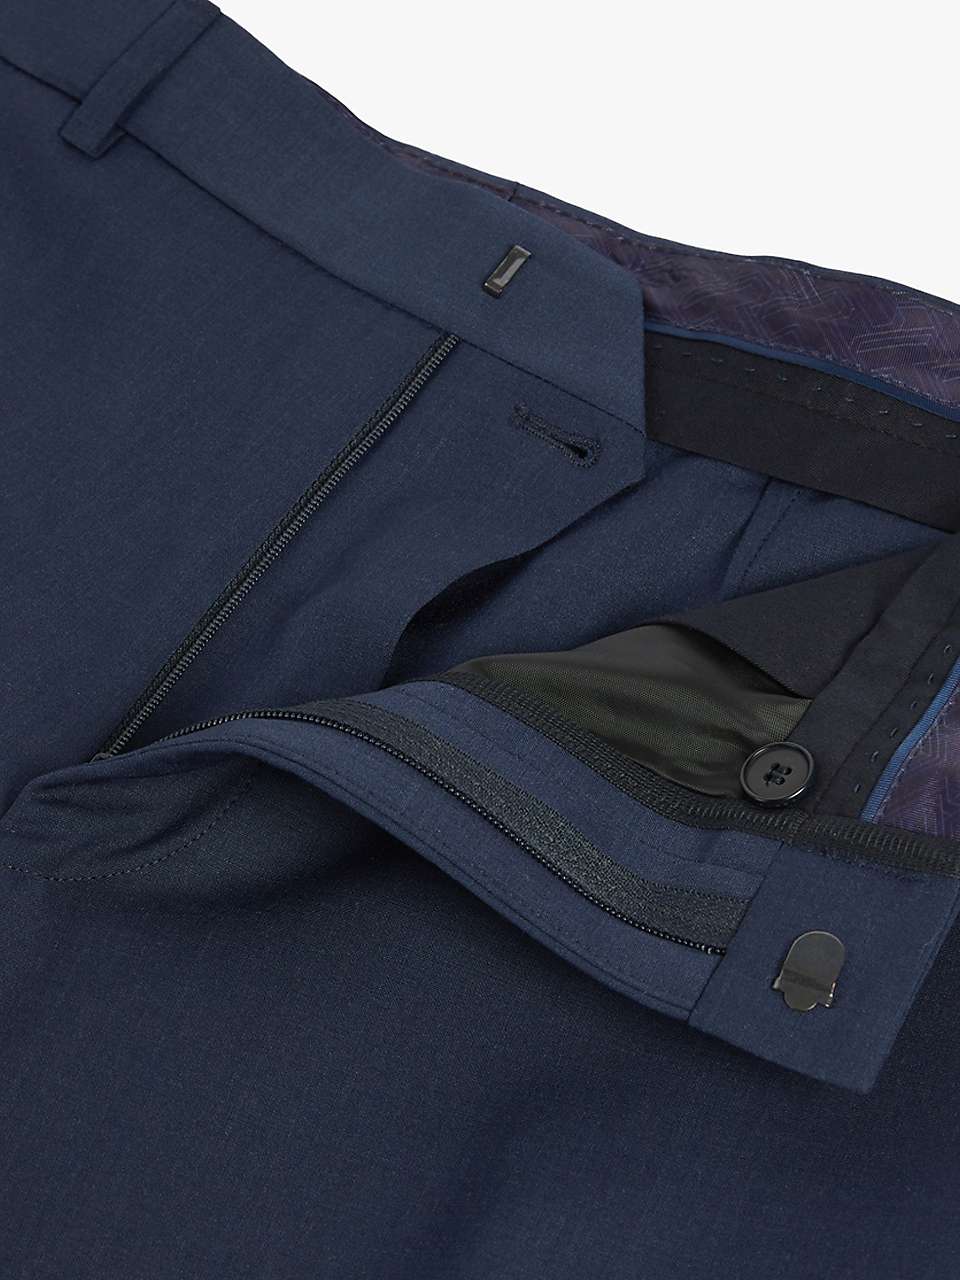 Buy Ted Baker Wool Blend Slim Panama Suit Trousers, Blue Online at johnlewis.com